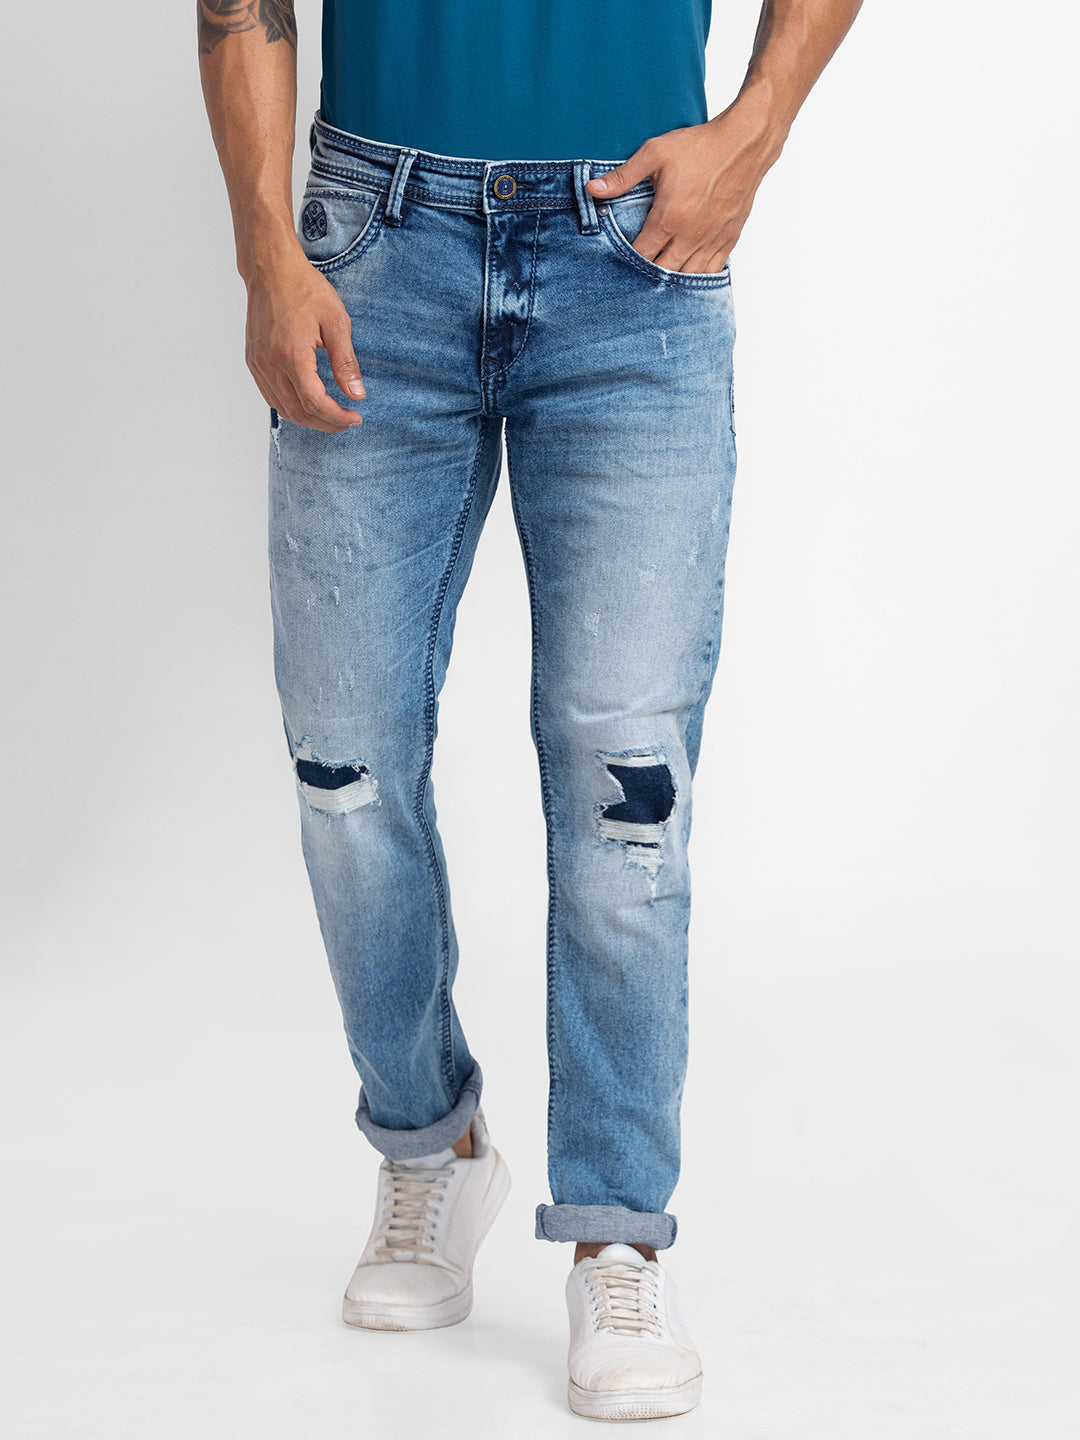 Buy Low-Rise Slim Fit Blue Jeans For Men Online at Spykar